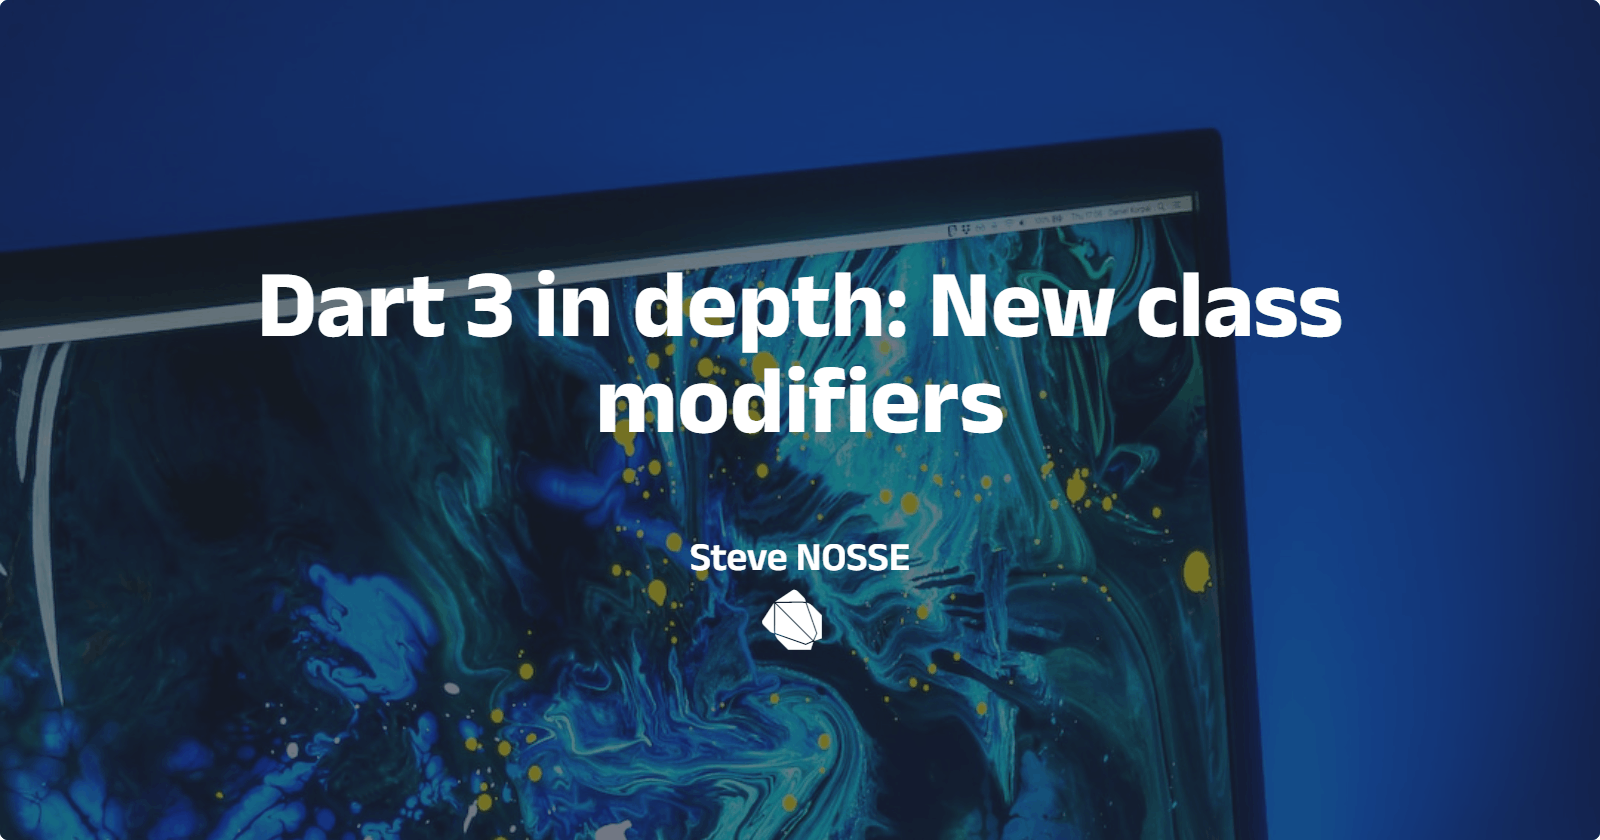 Dart 3 in depth: New class modifiers